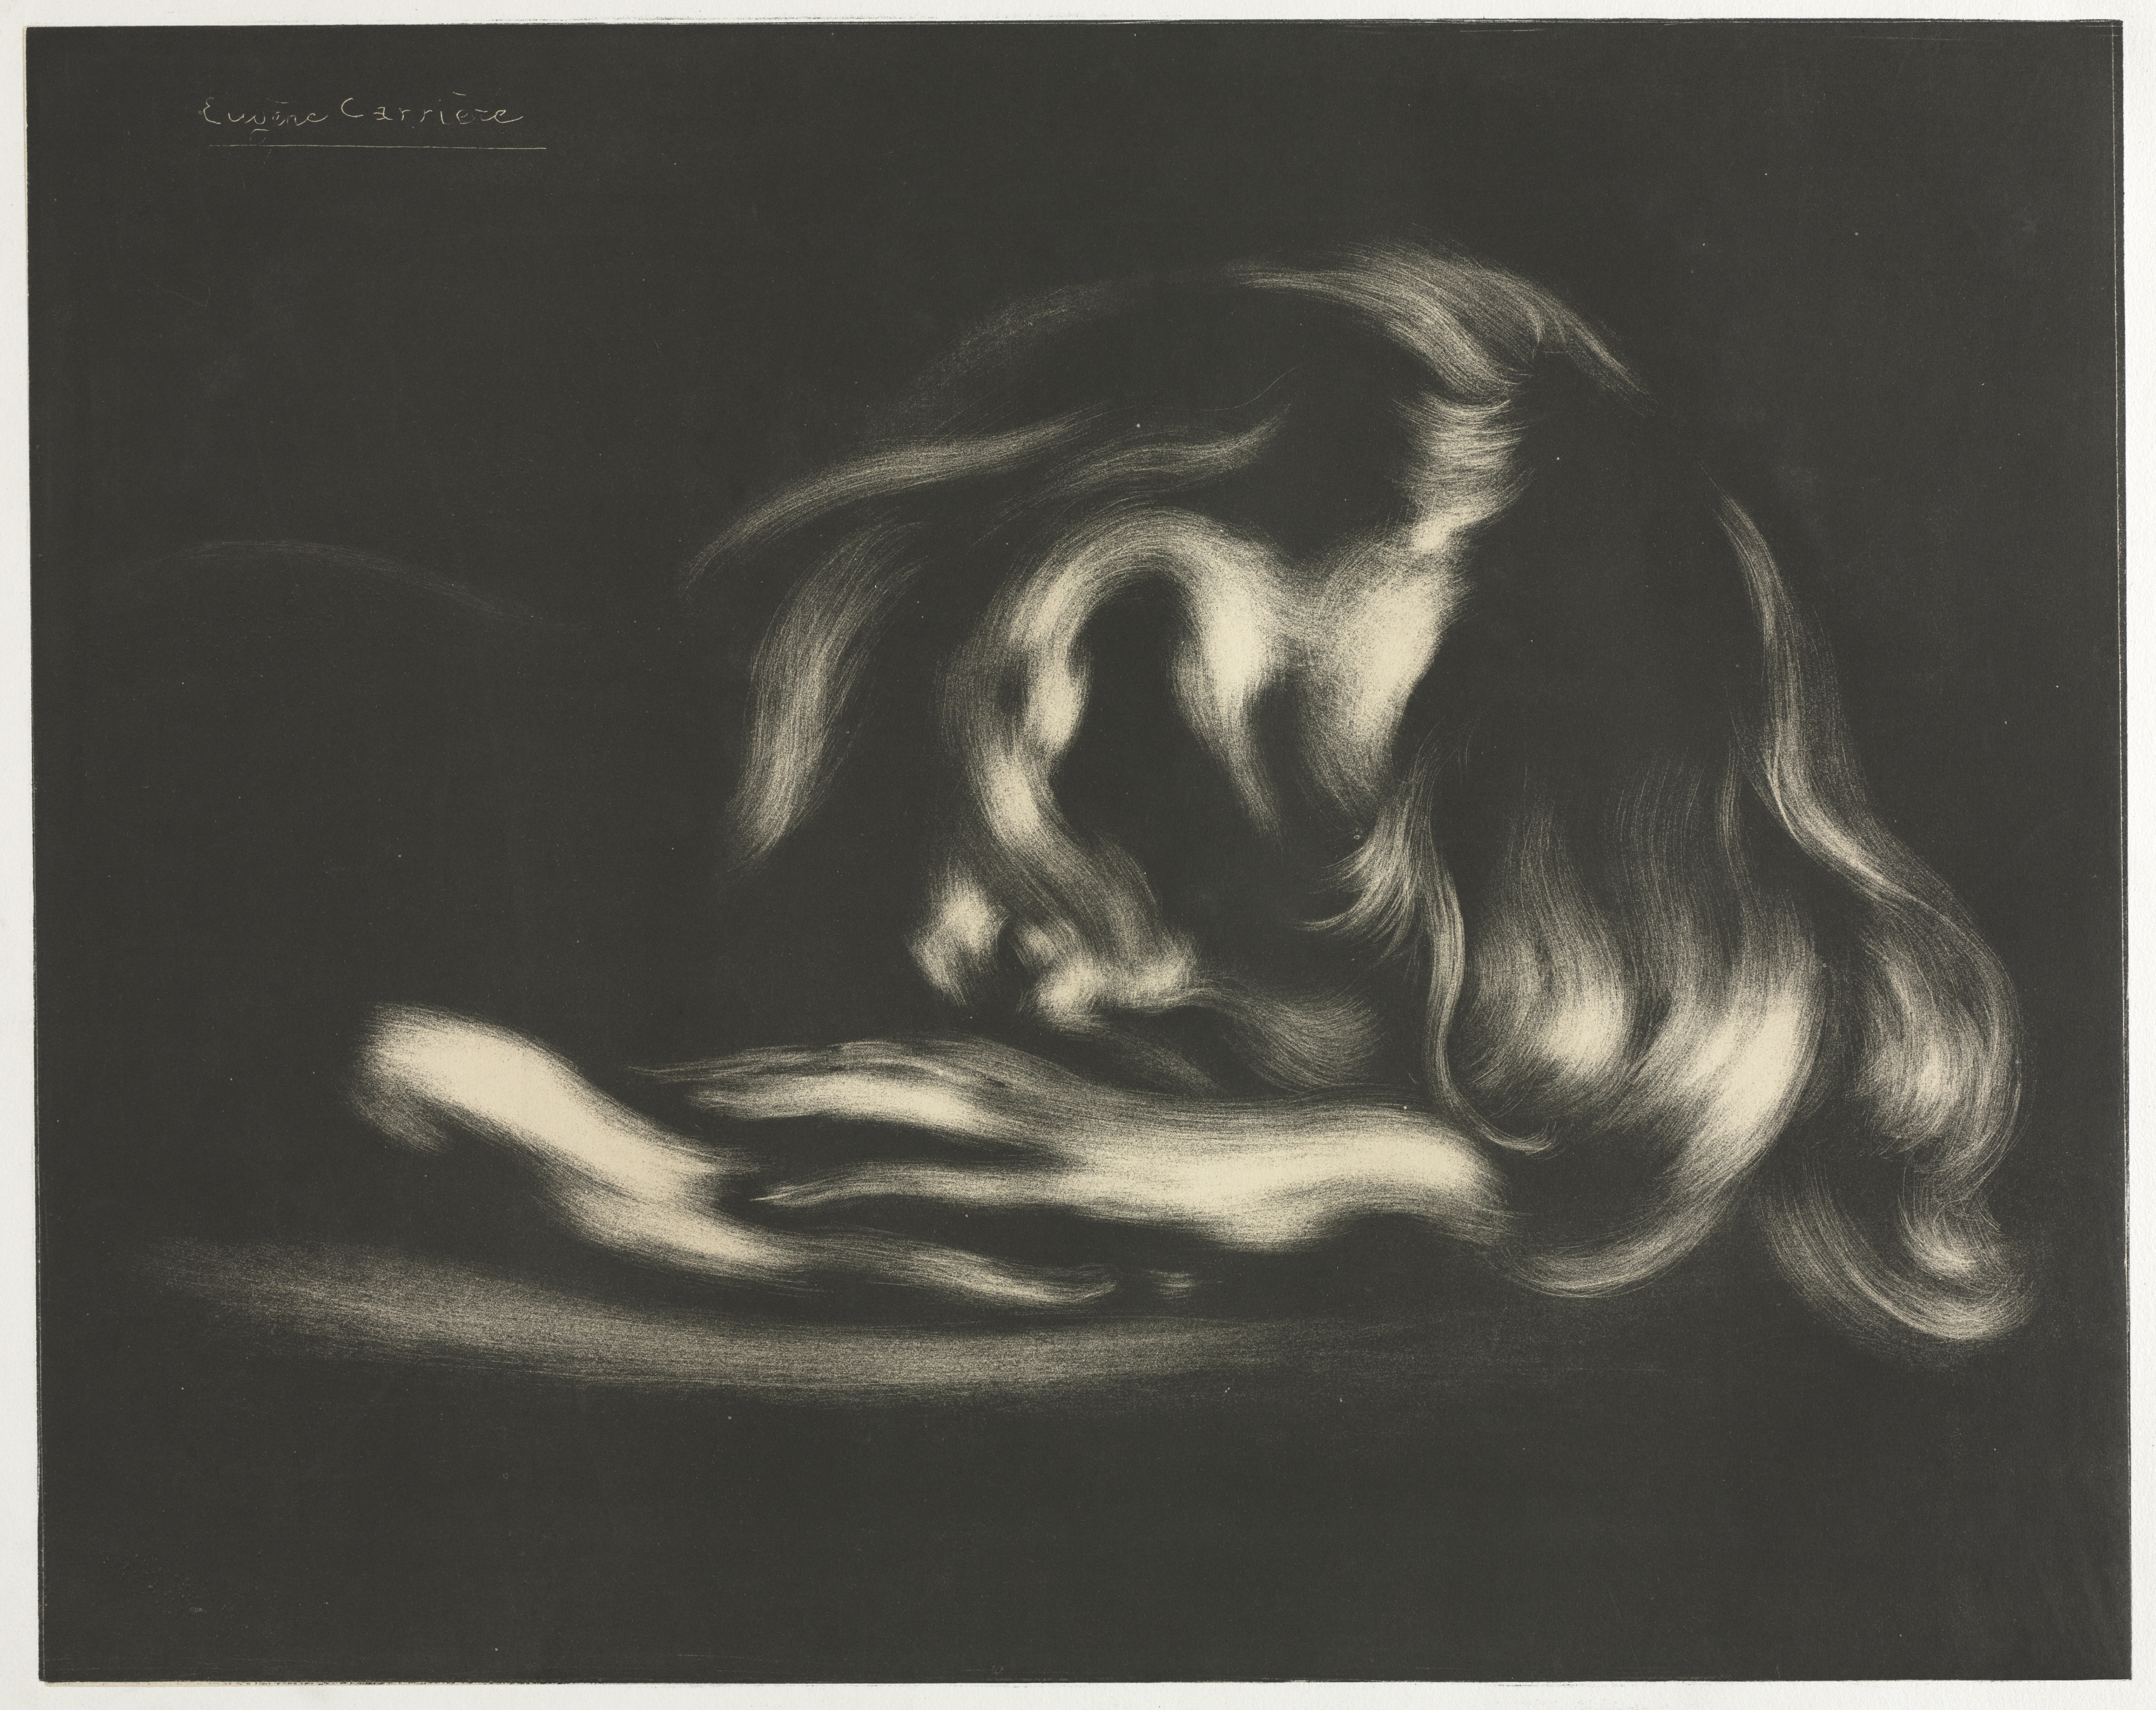 Sleep (Jean-René Carrière), from L'Album d'estampes originales de la Galerie Vollard